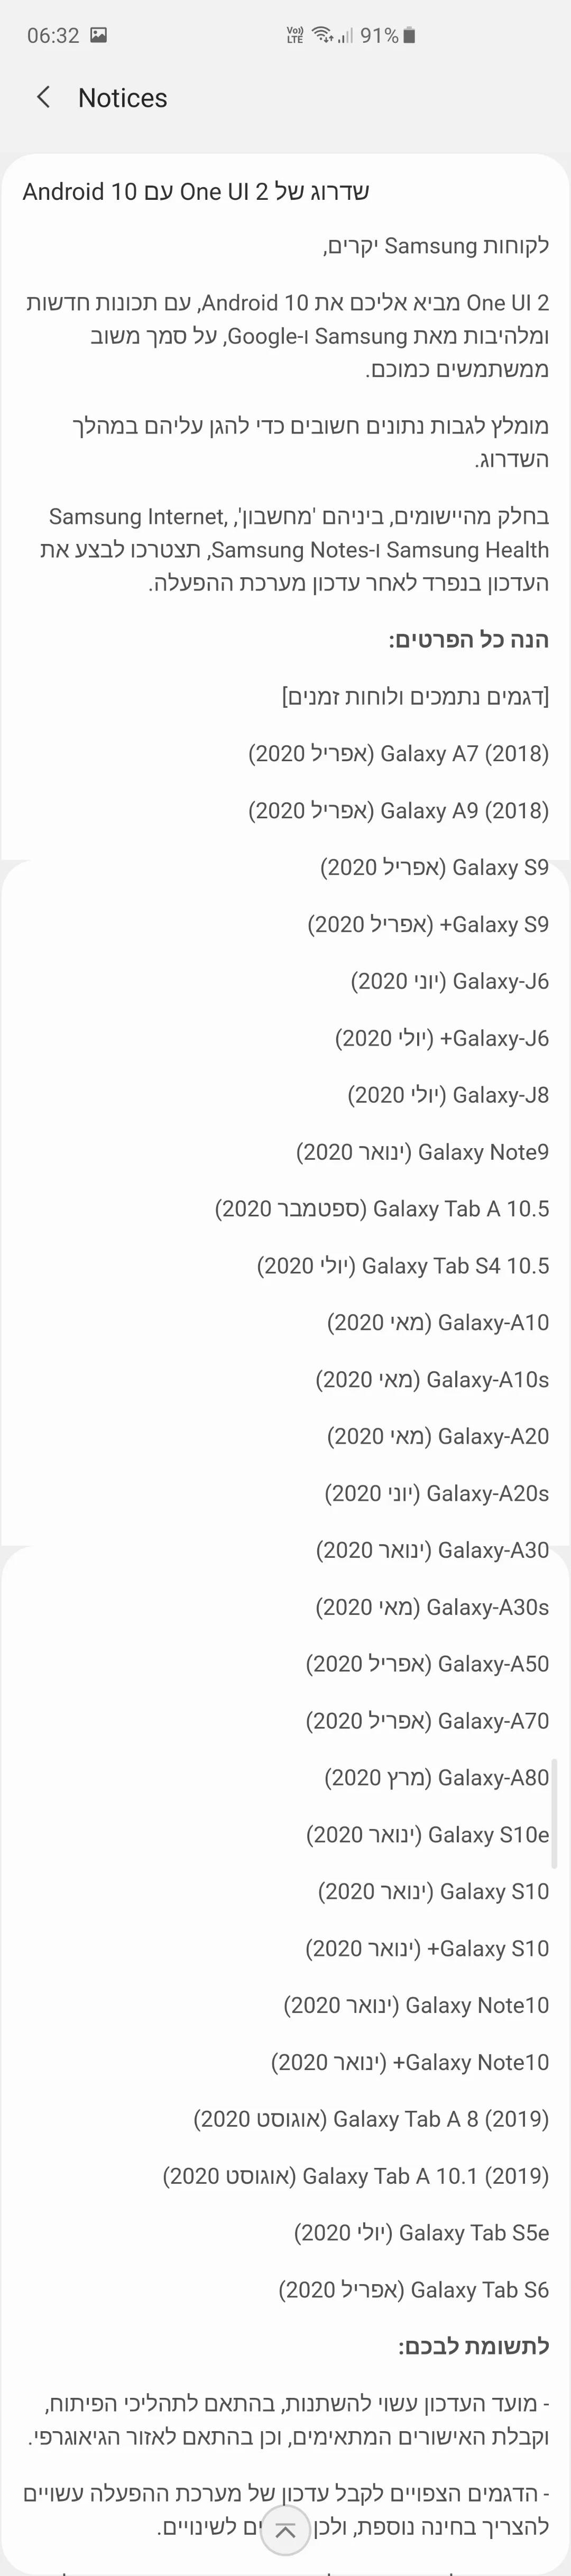 Android 10 releasedatum samsung-telefoner